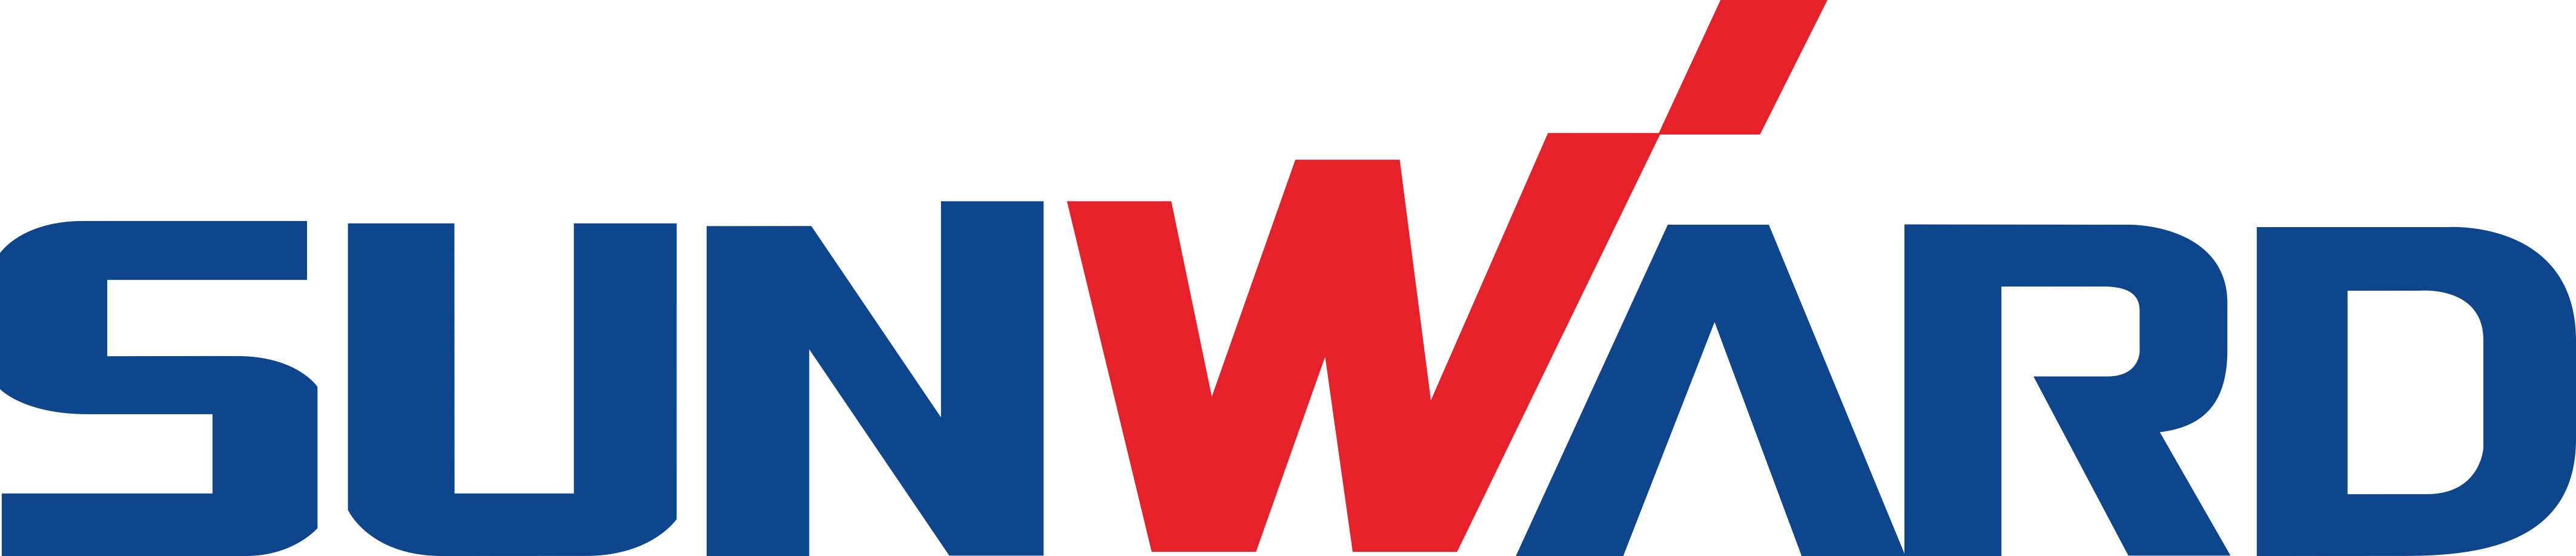 Sunward logo marques selected